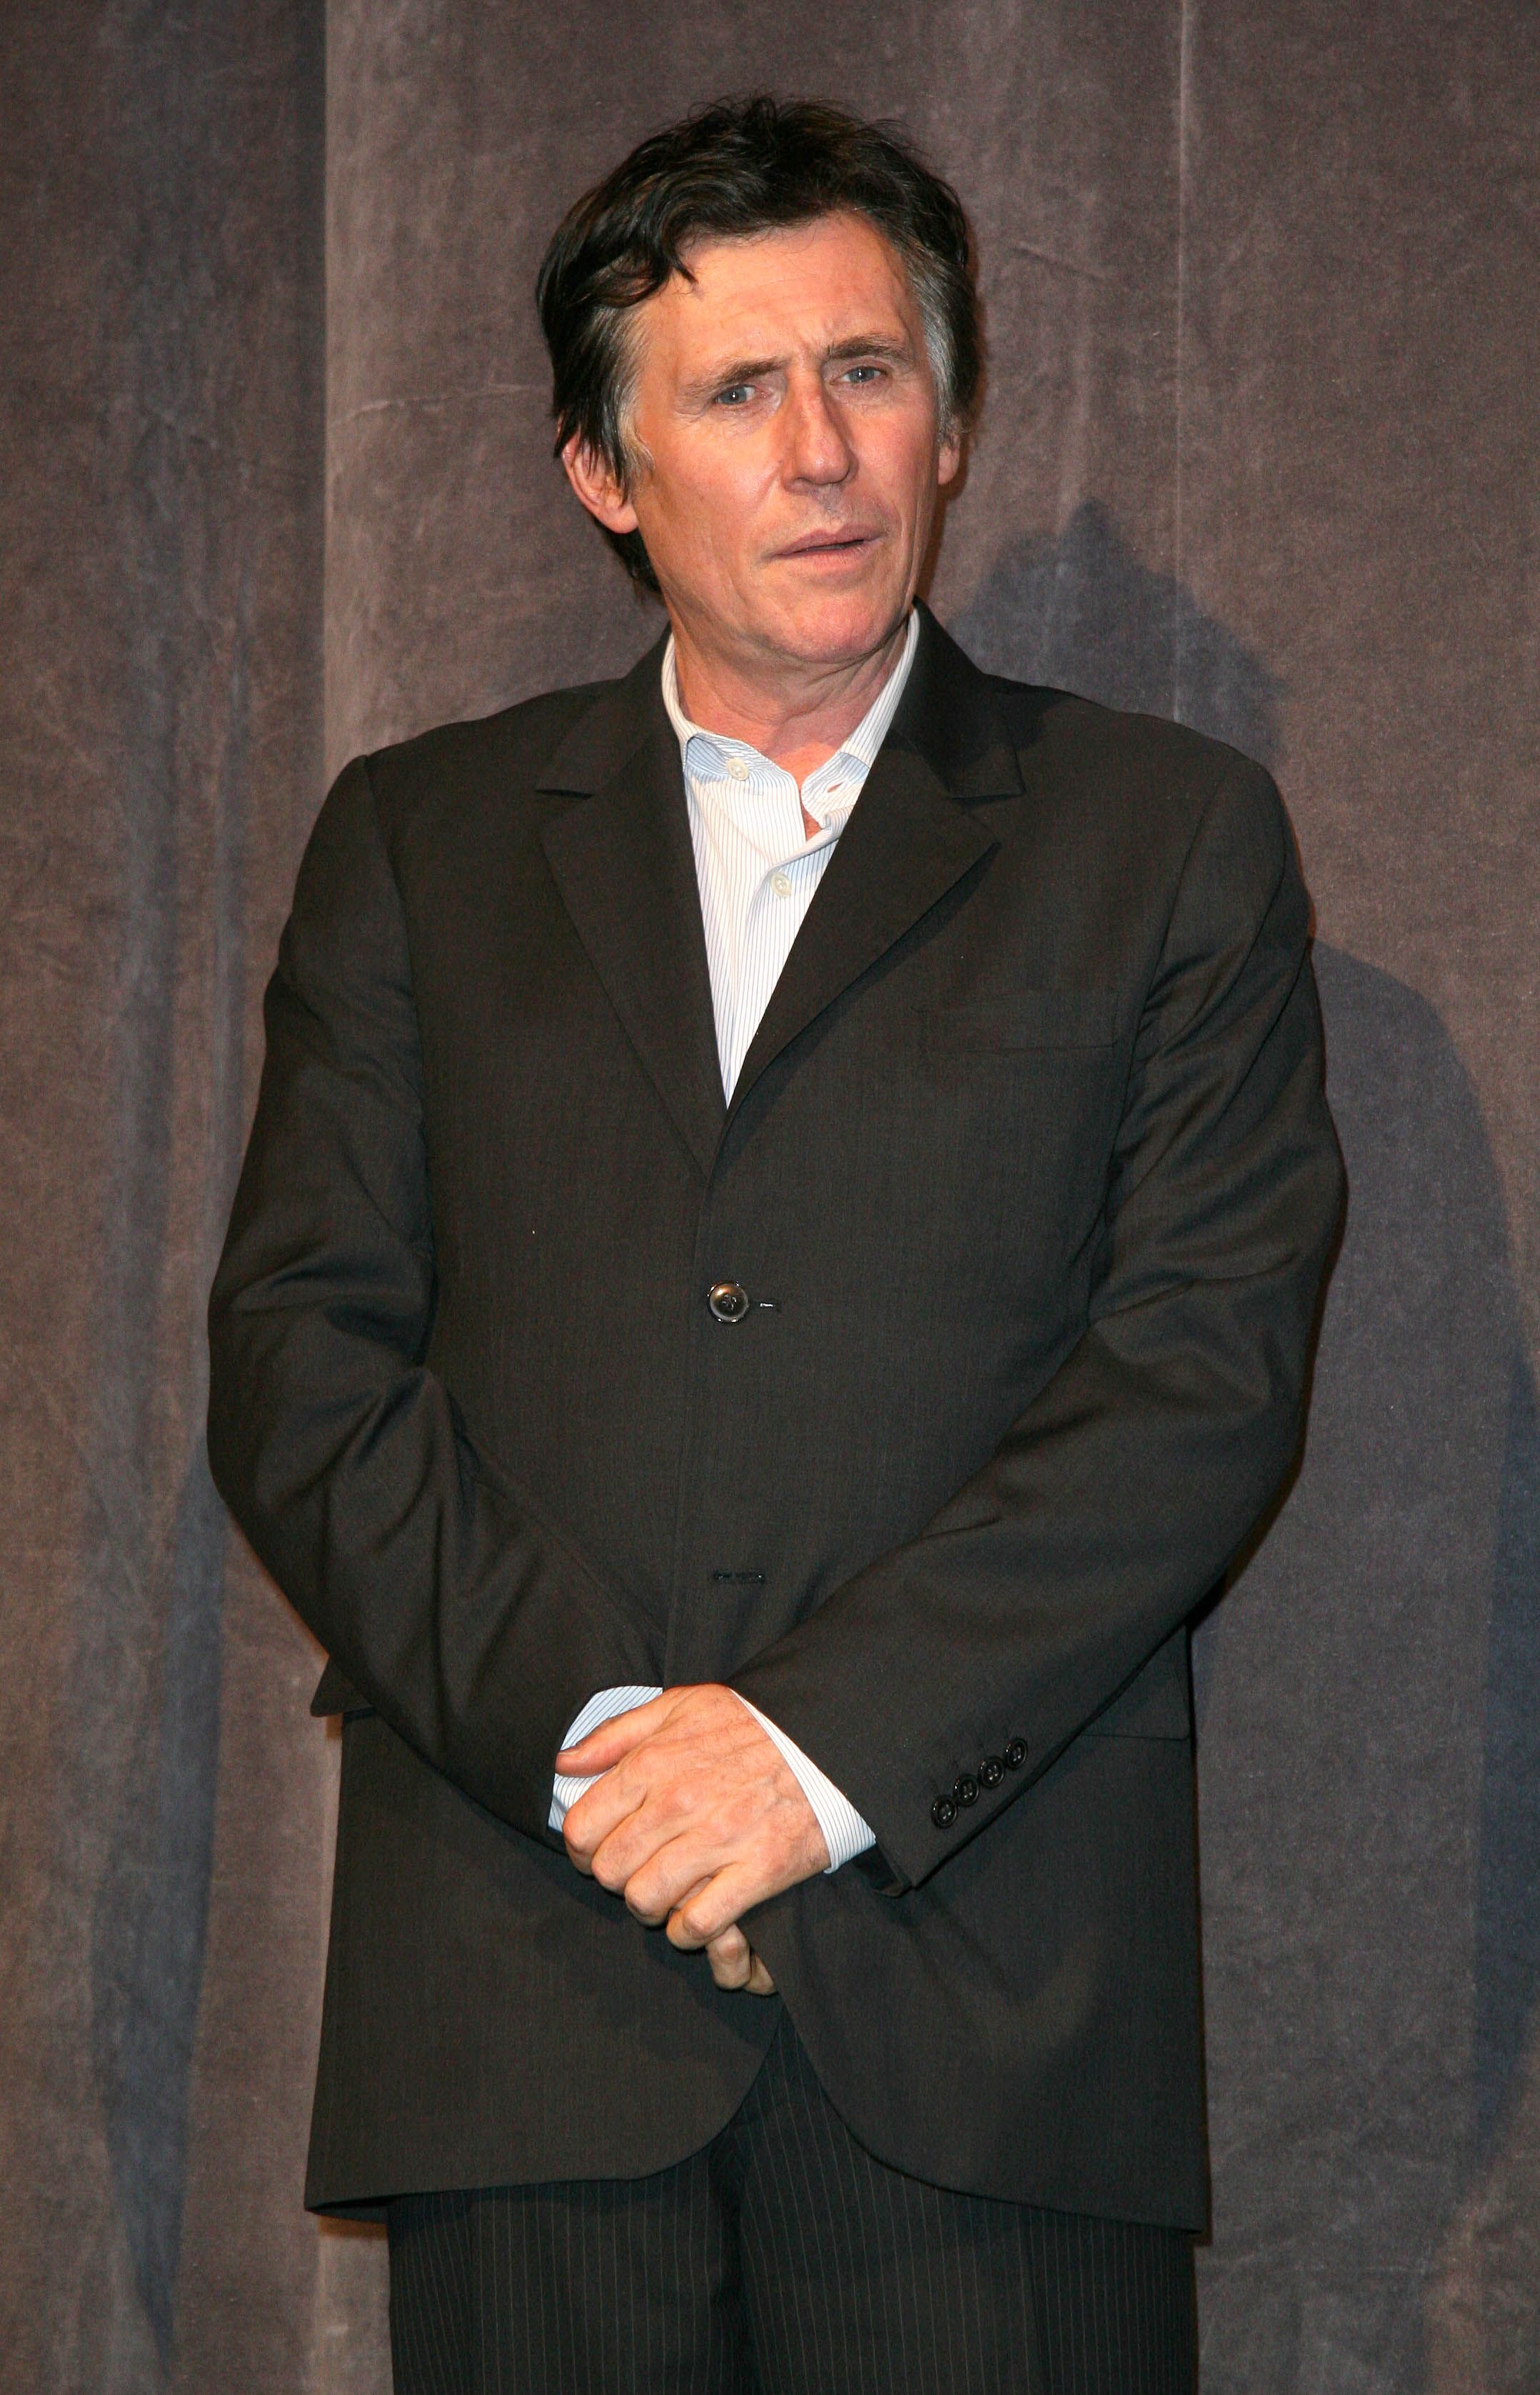 Gabriel Byrne at 2007 event